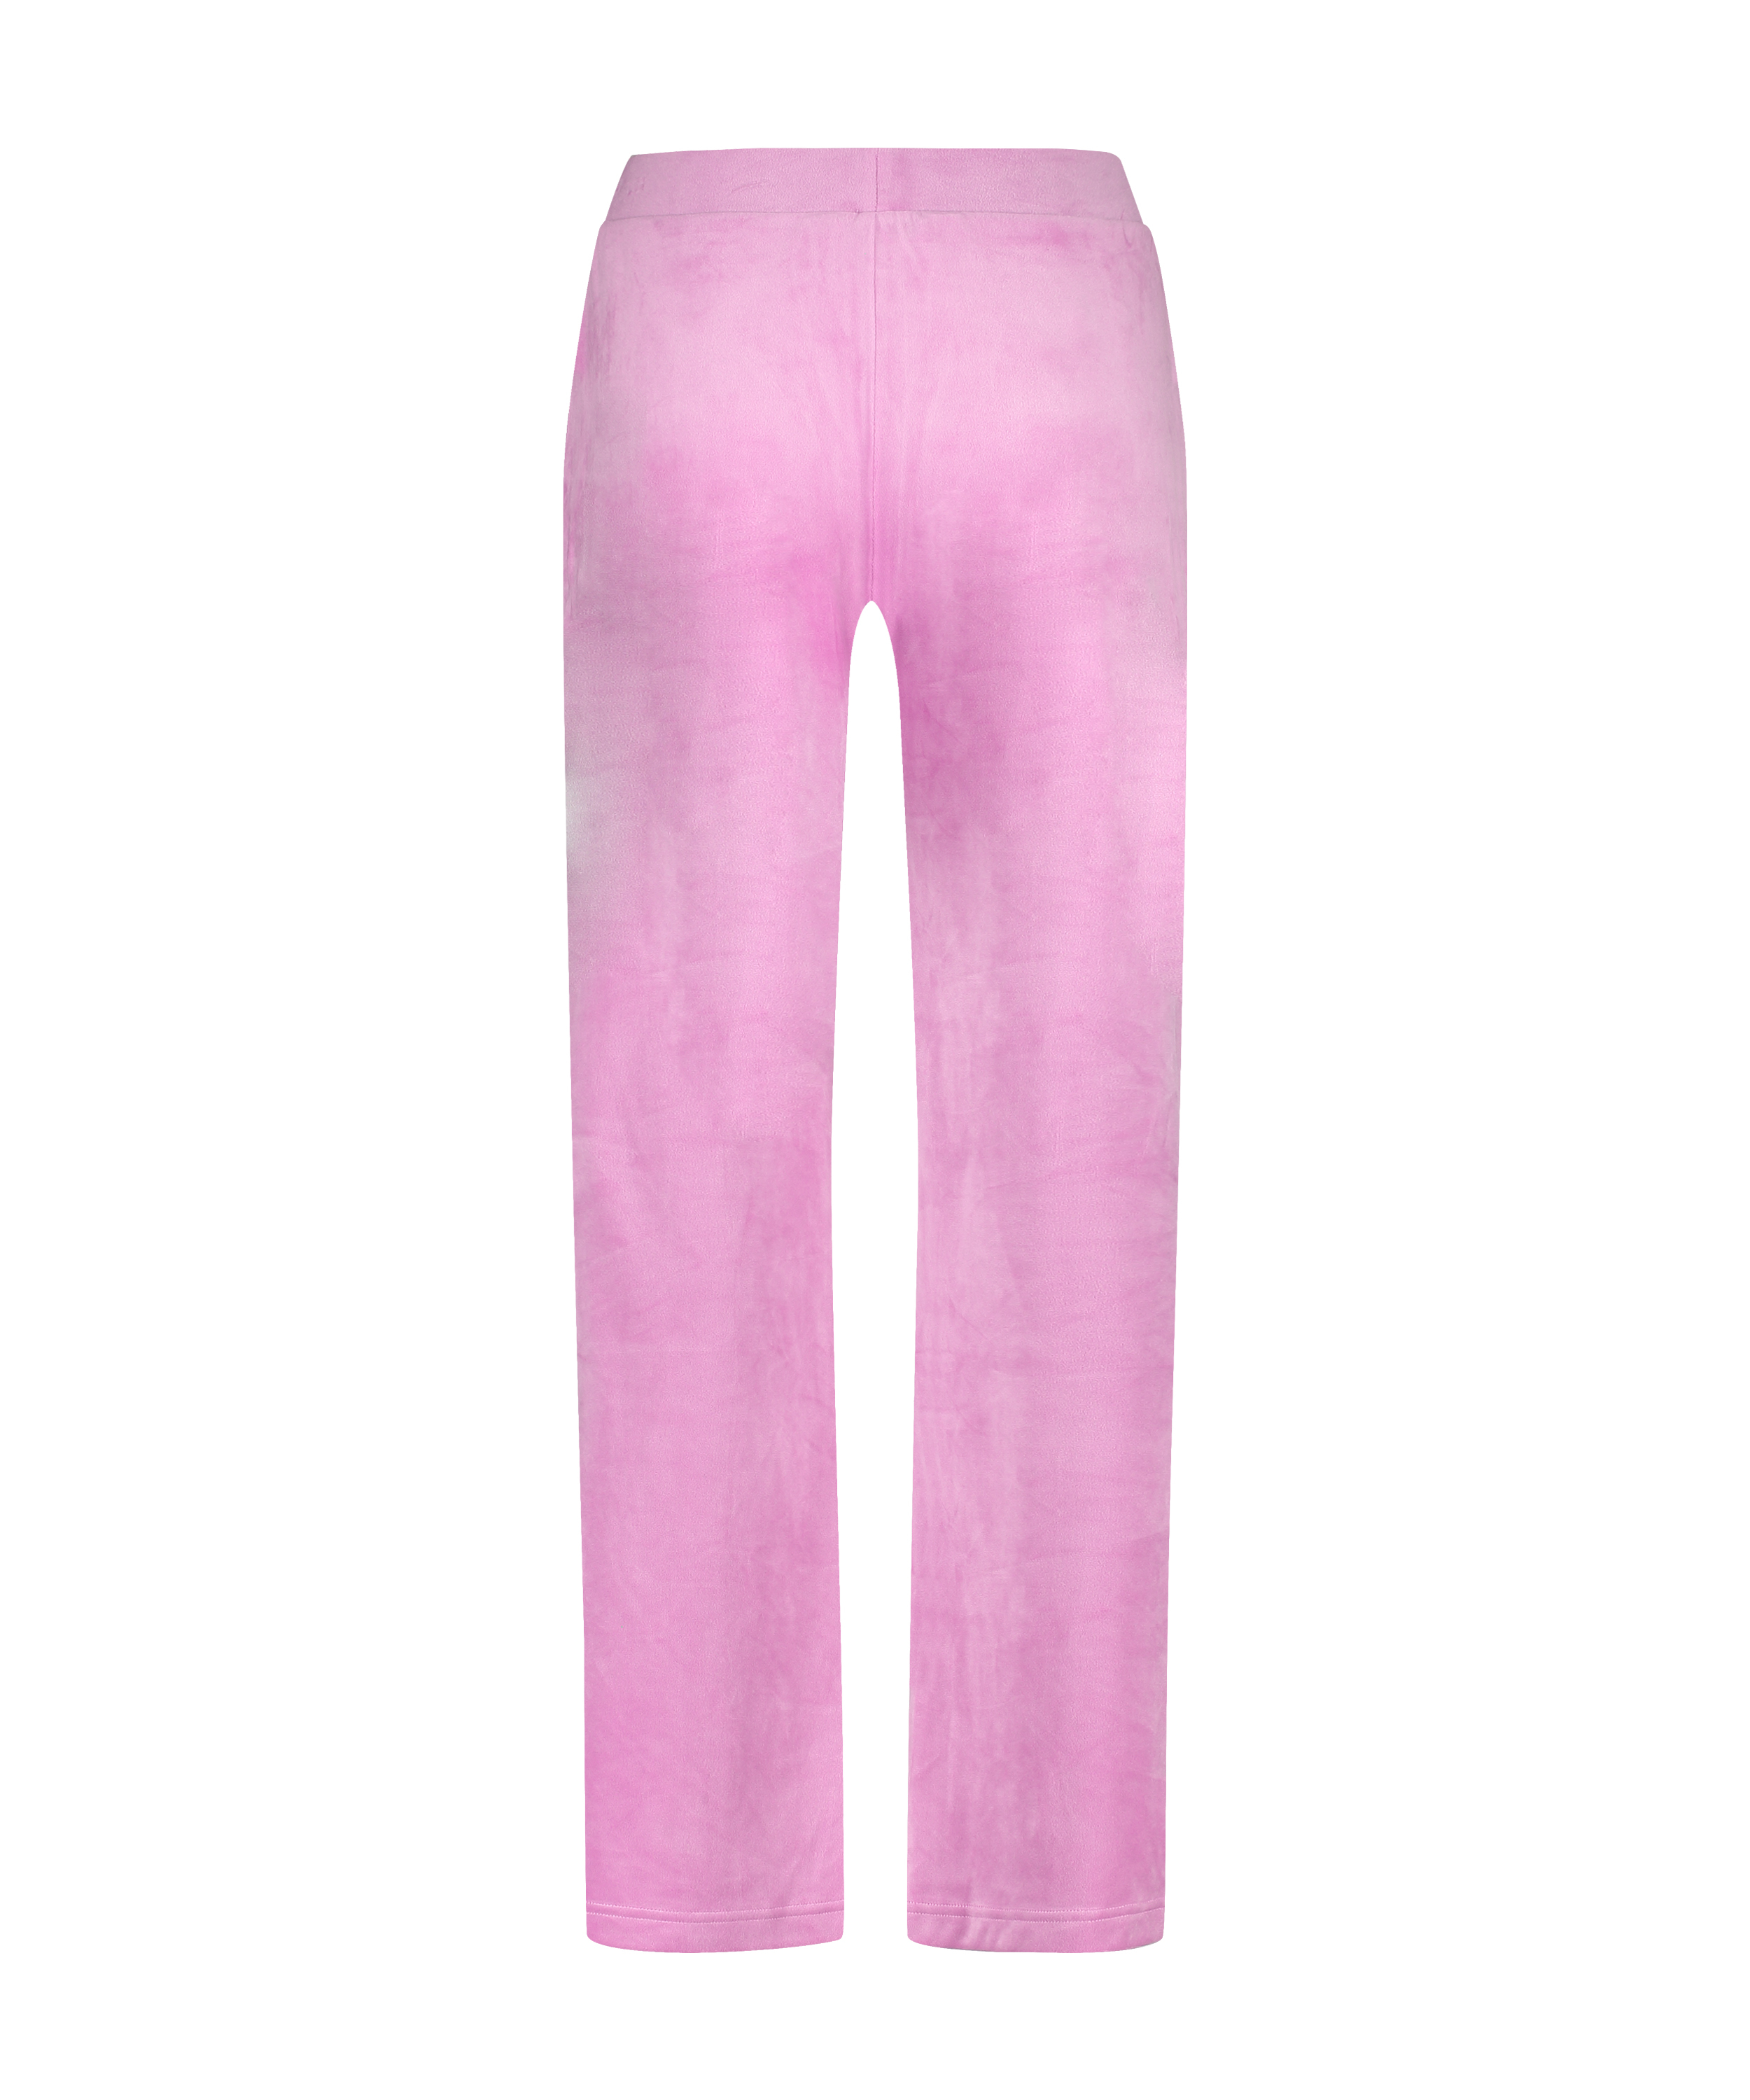 Tall Pyjamasbukser velour, pink, main